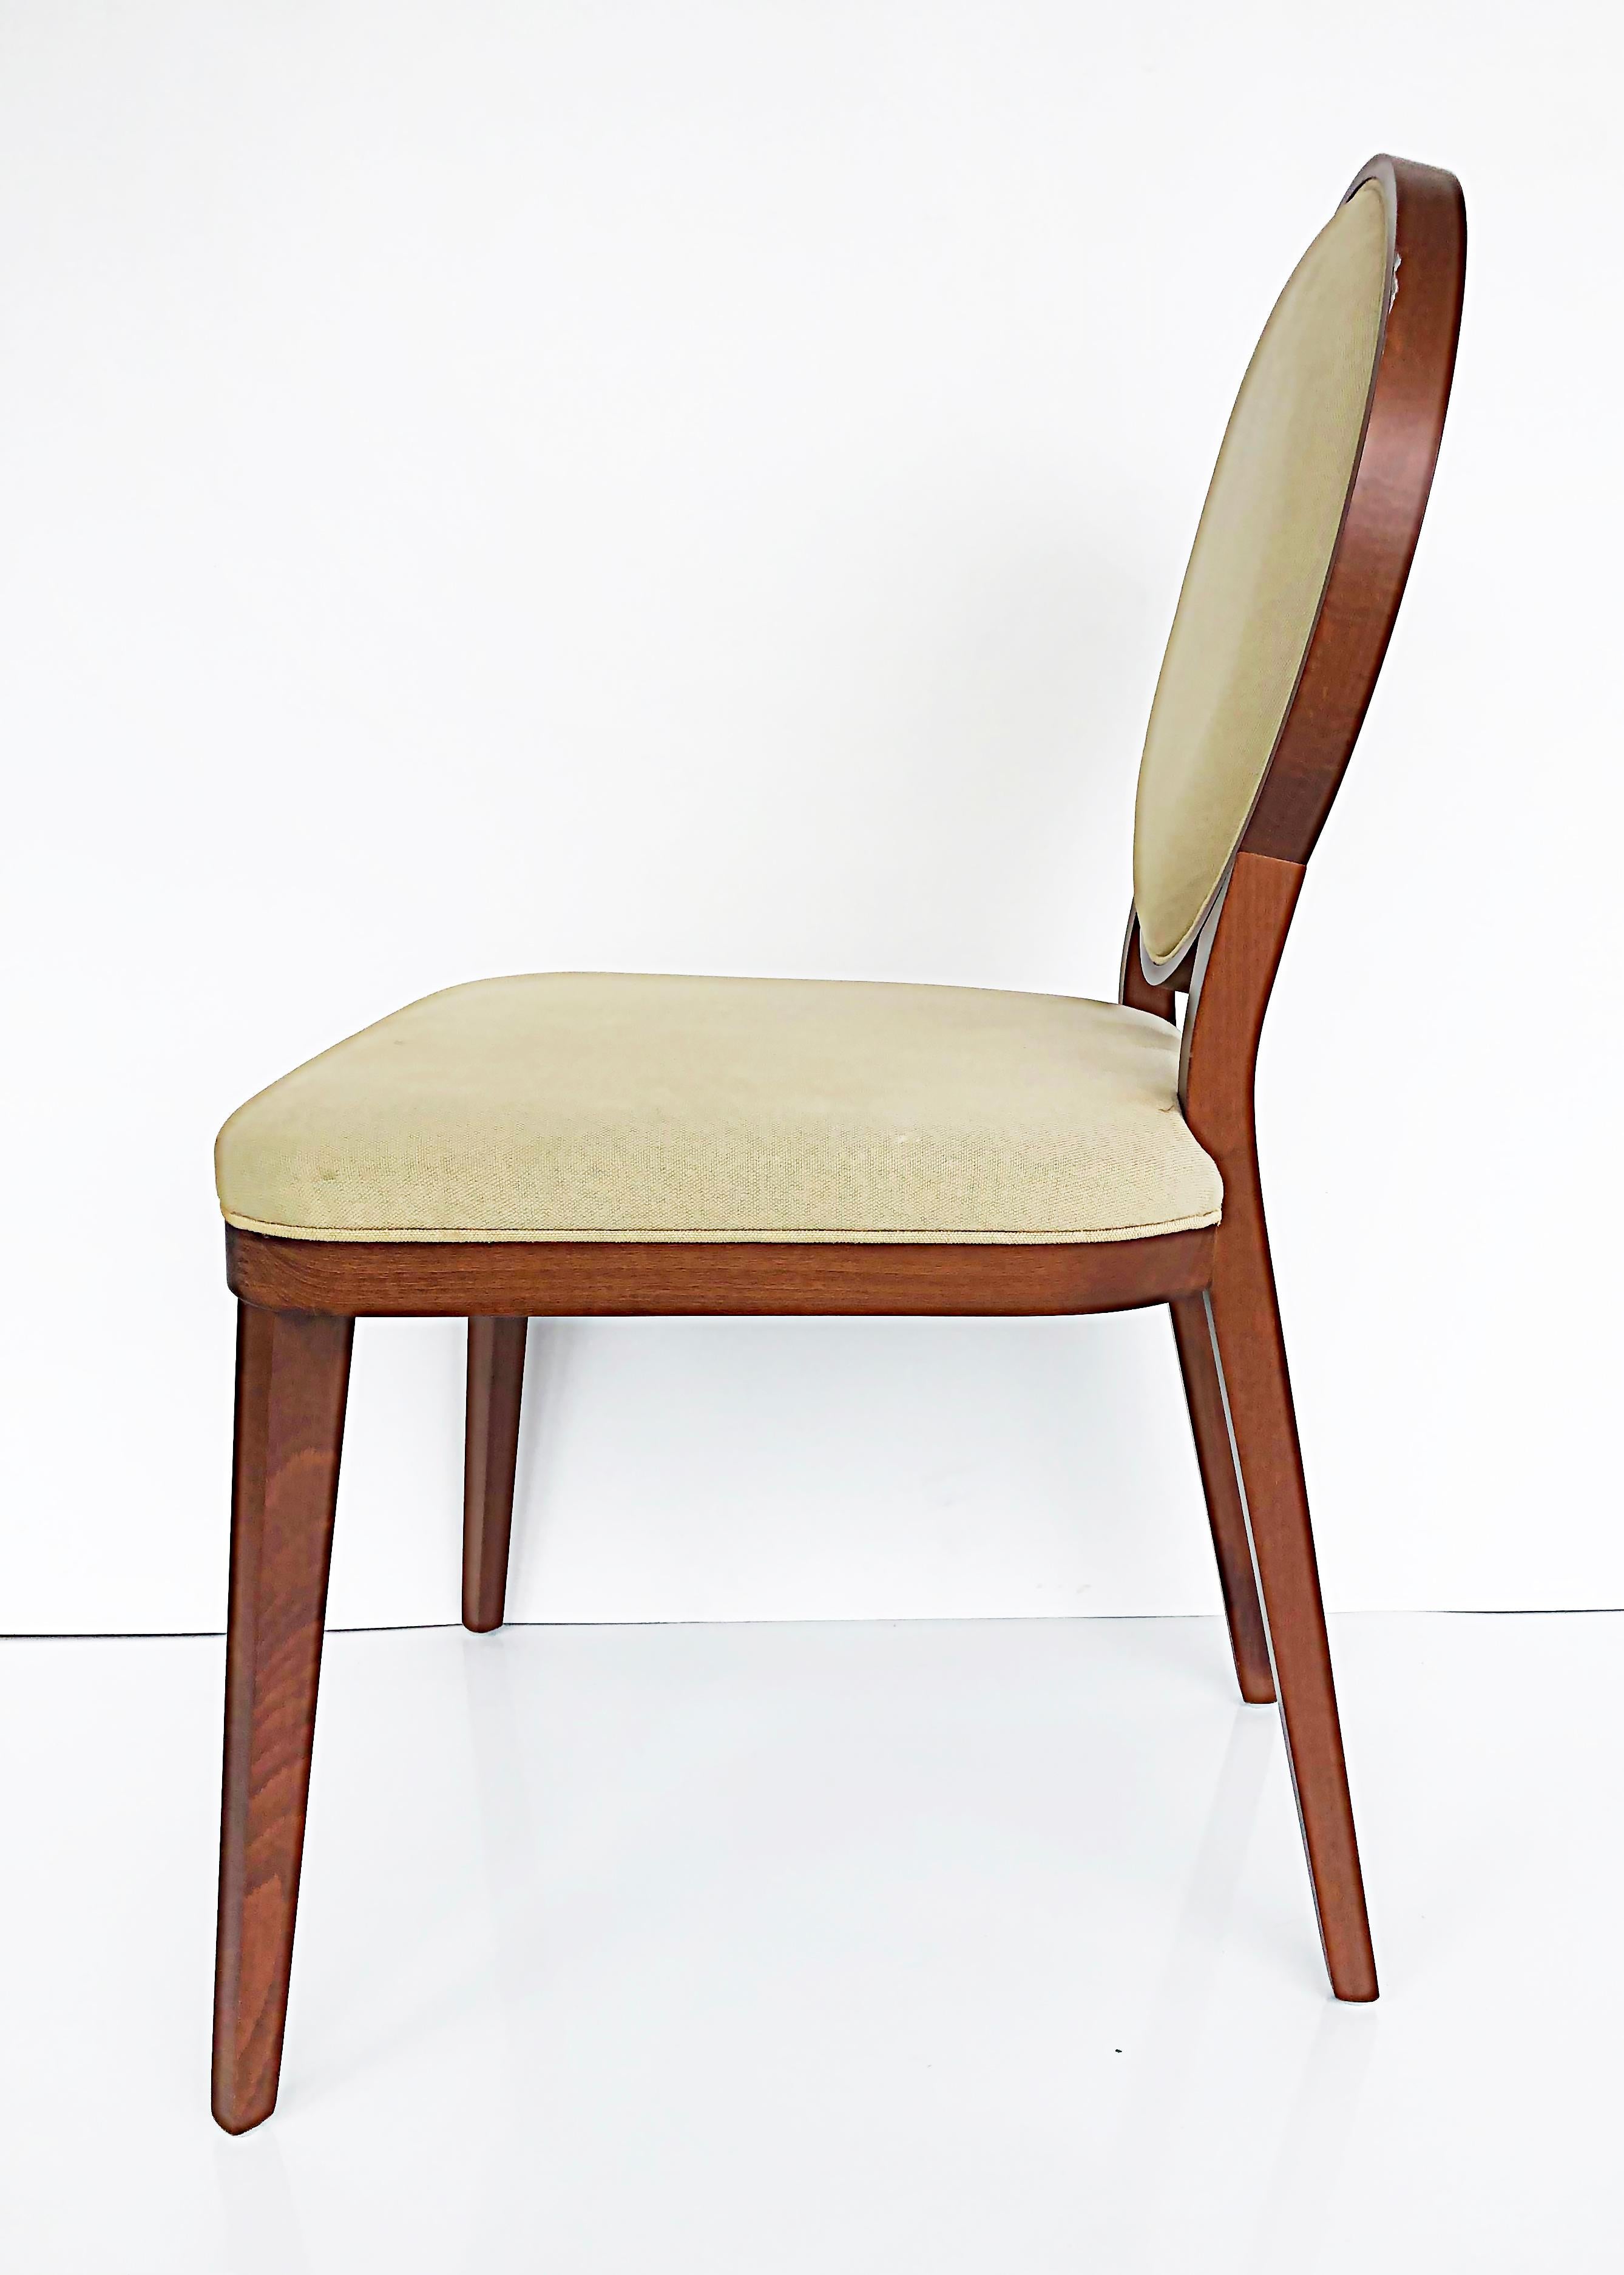 Fabric Bross Studio Riforma Italy Art Deco Style Beech Wood Chairs, Set of 6